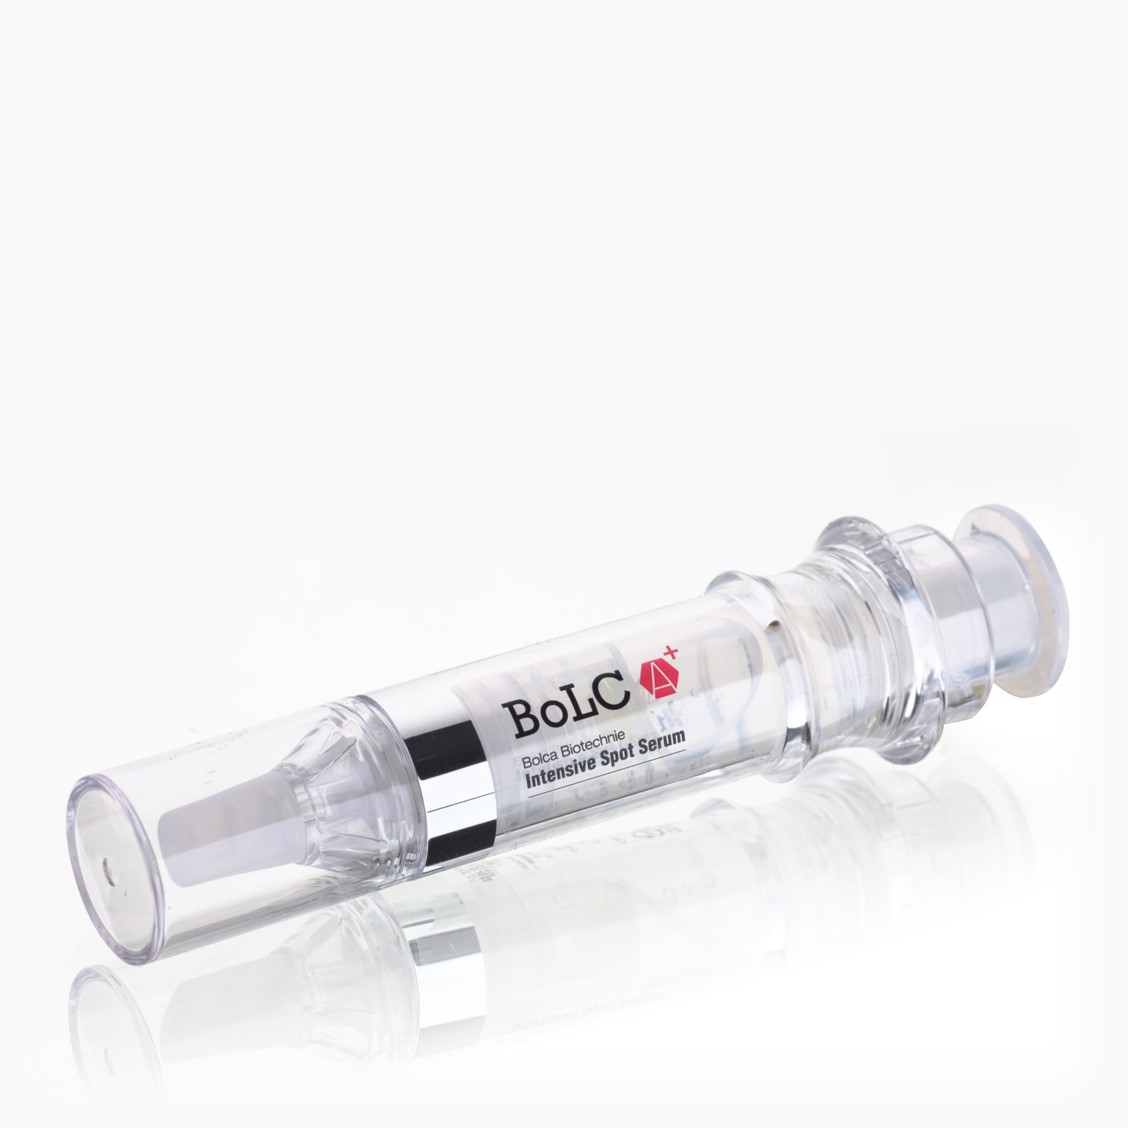 BoLCA Biotechnie Intensive Spot Serum,1шт